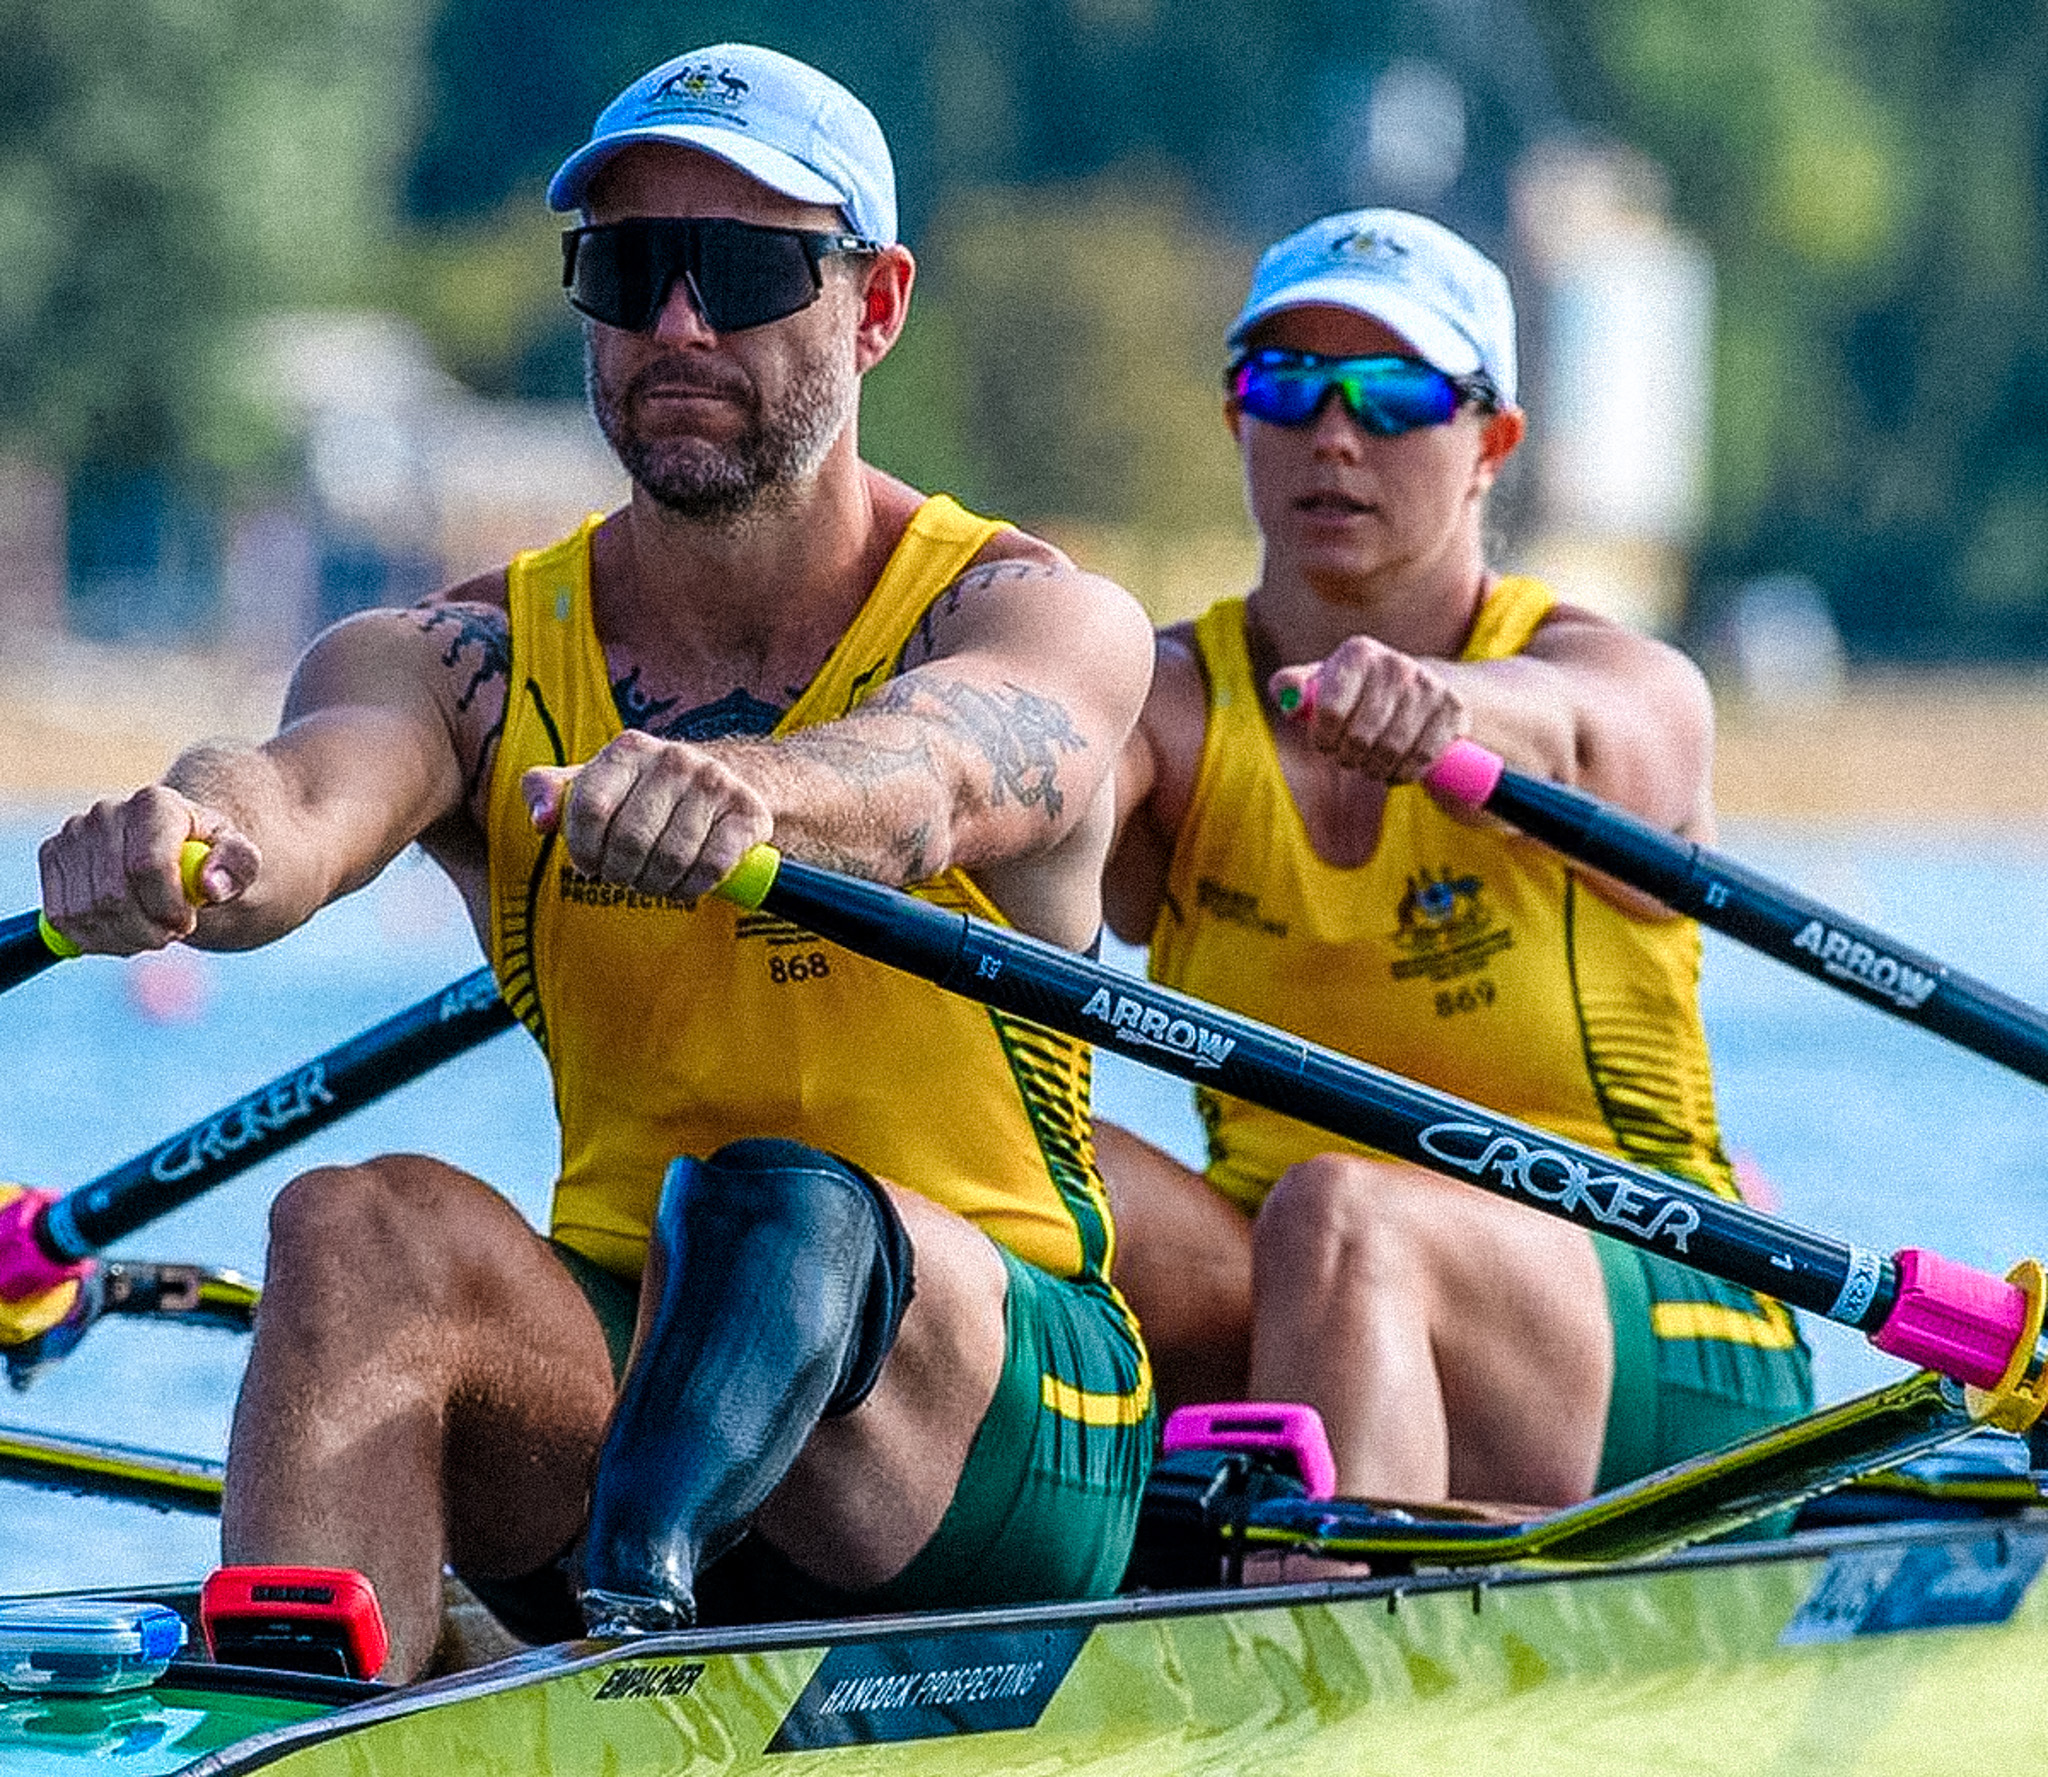 two para athletes rowing in Australian uniform